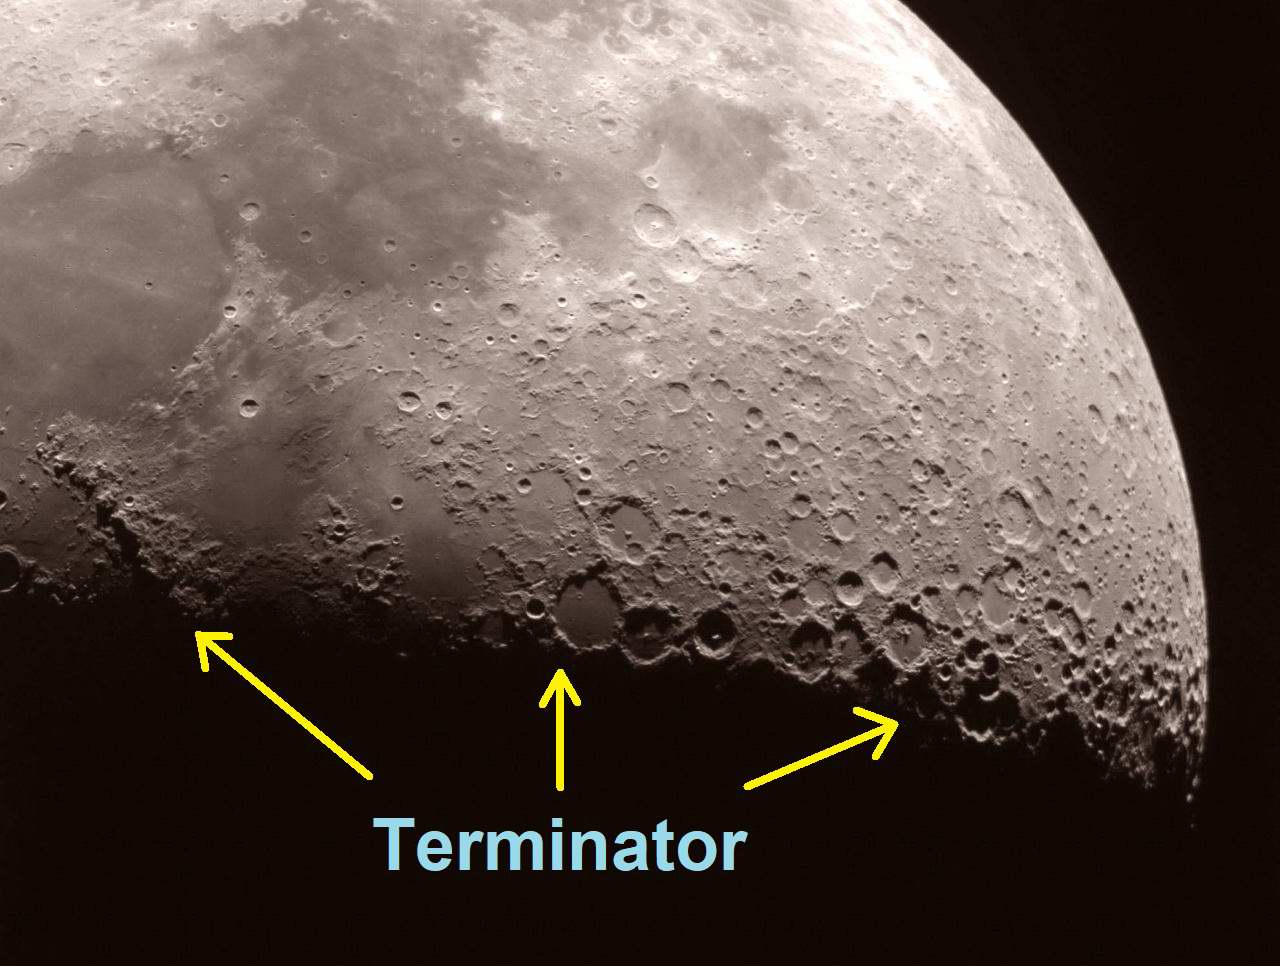 Moon Terminator. Milwaukee Astronomical Society image